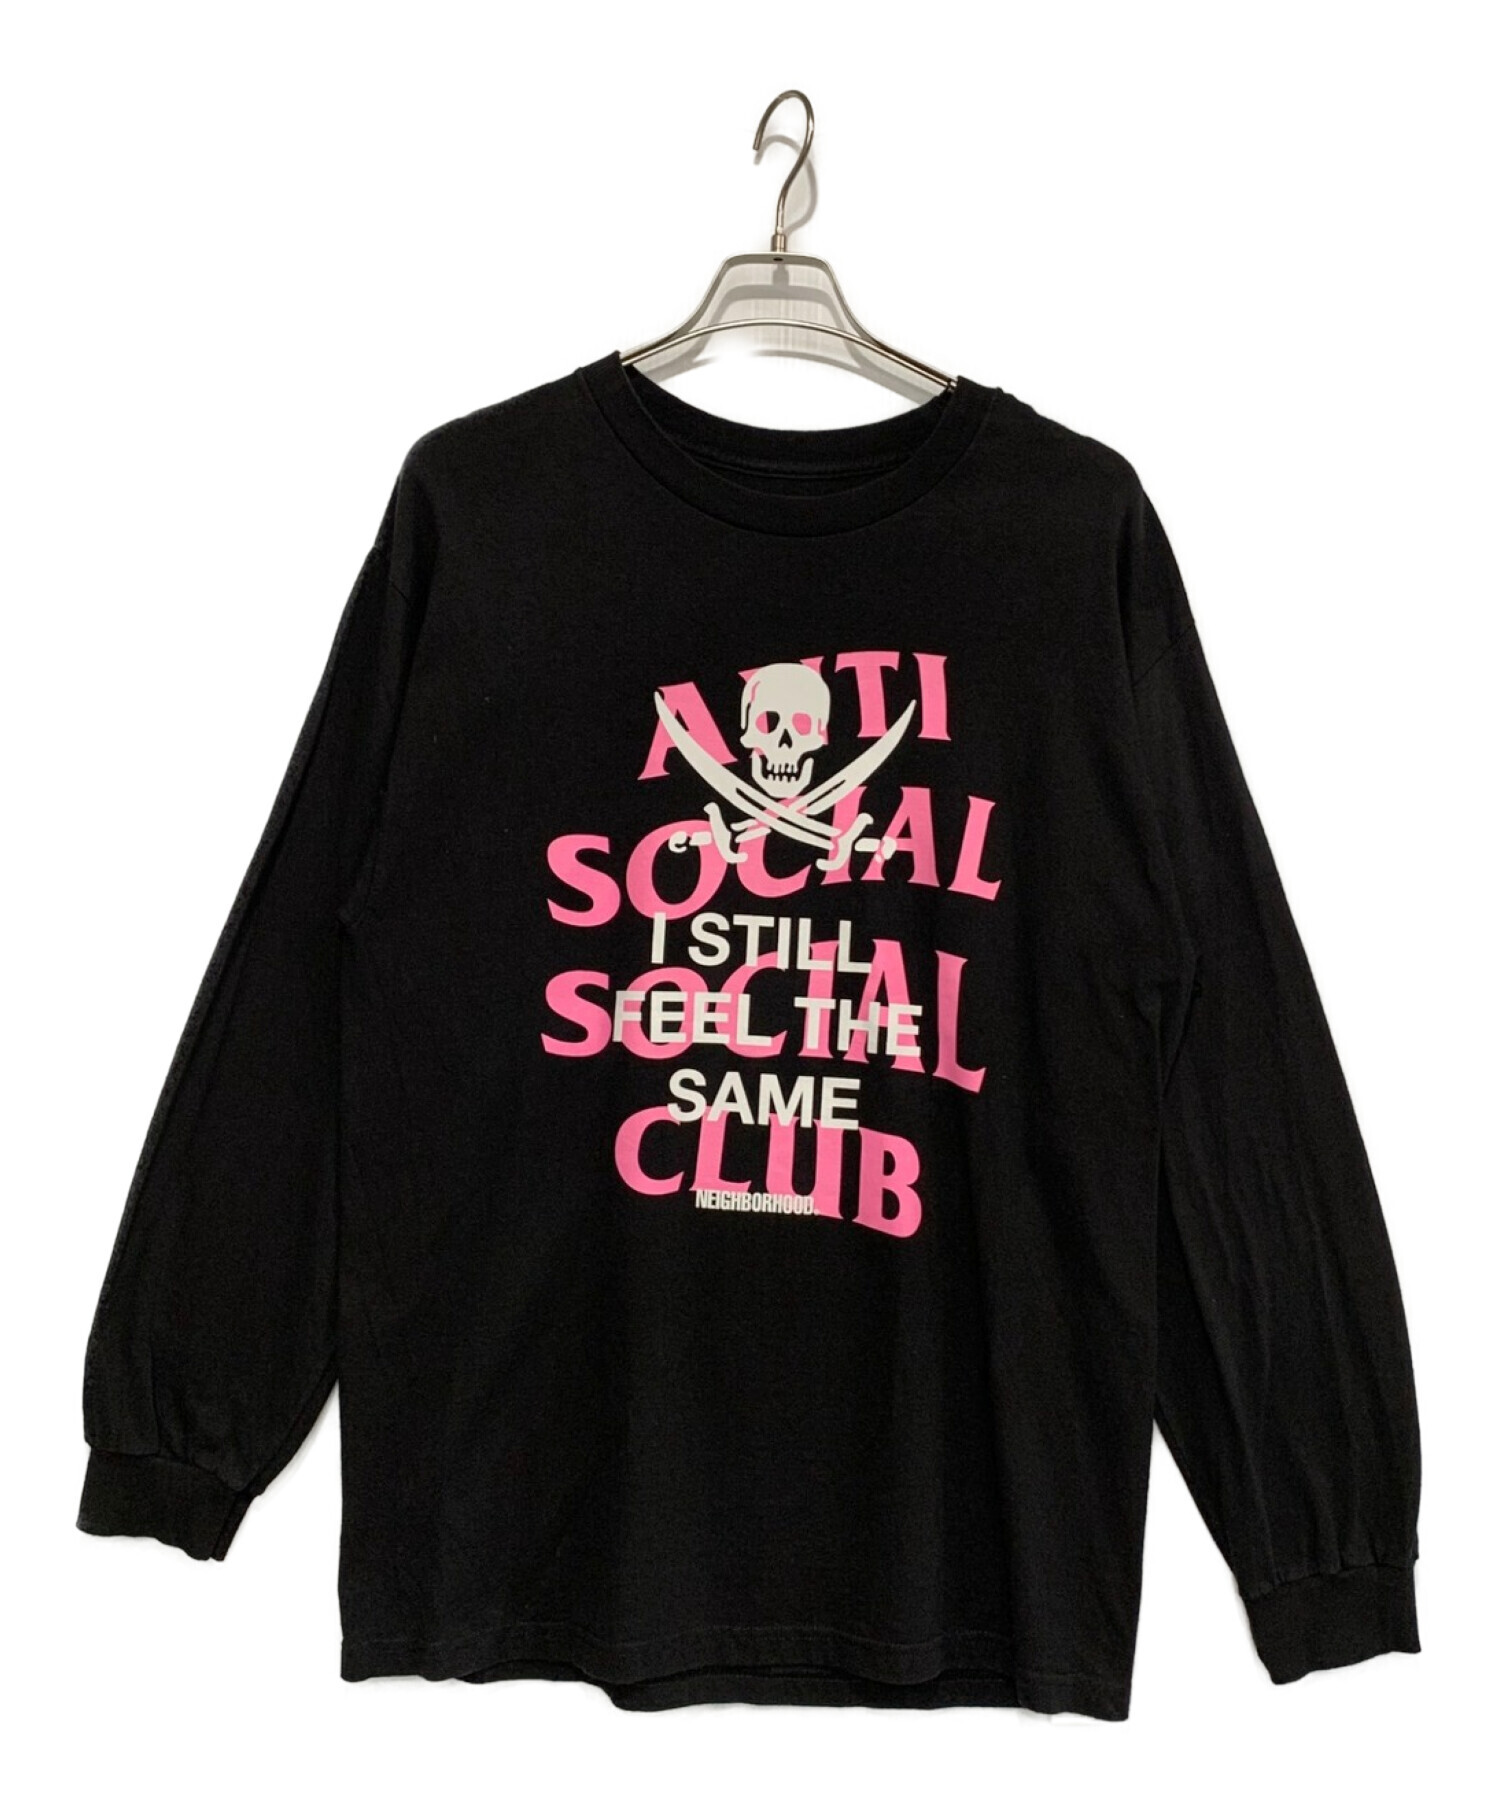 (S) Anti Social Social Club Neighborhood